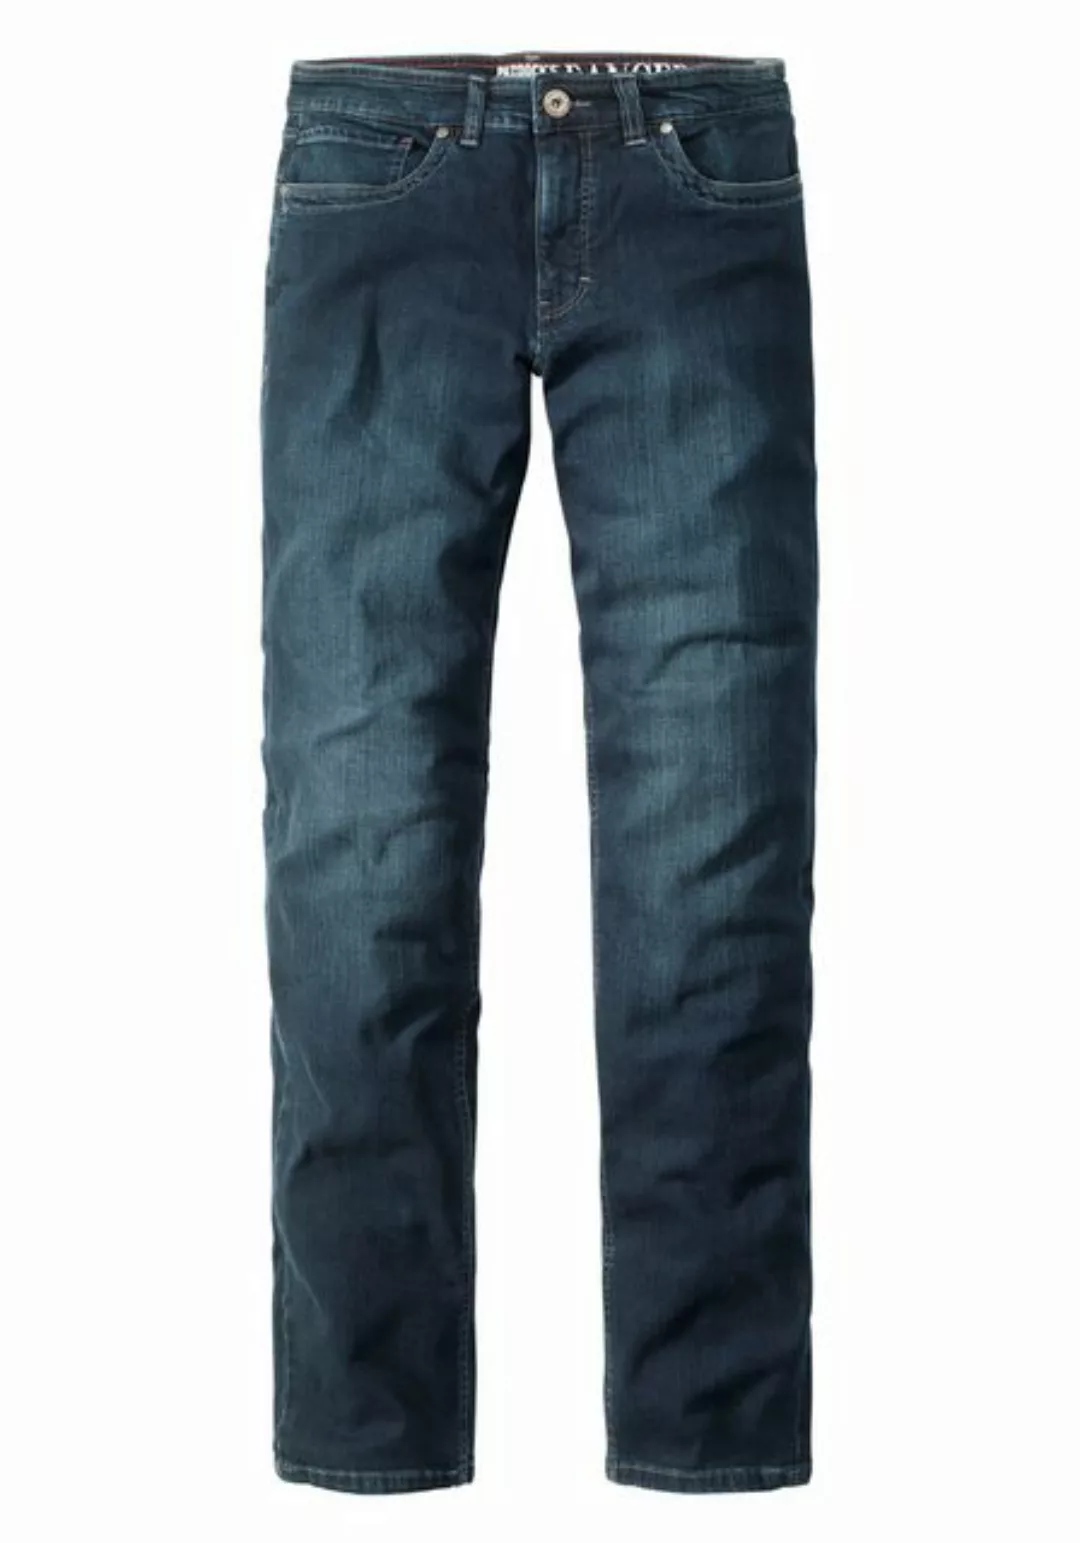 Paddock's 5-Pocket-Jeans PADDOCKS RANGER PIPE blue dark used 80120 4068.088 günstig online kaufen